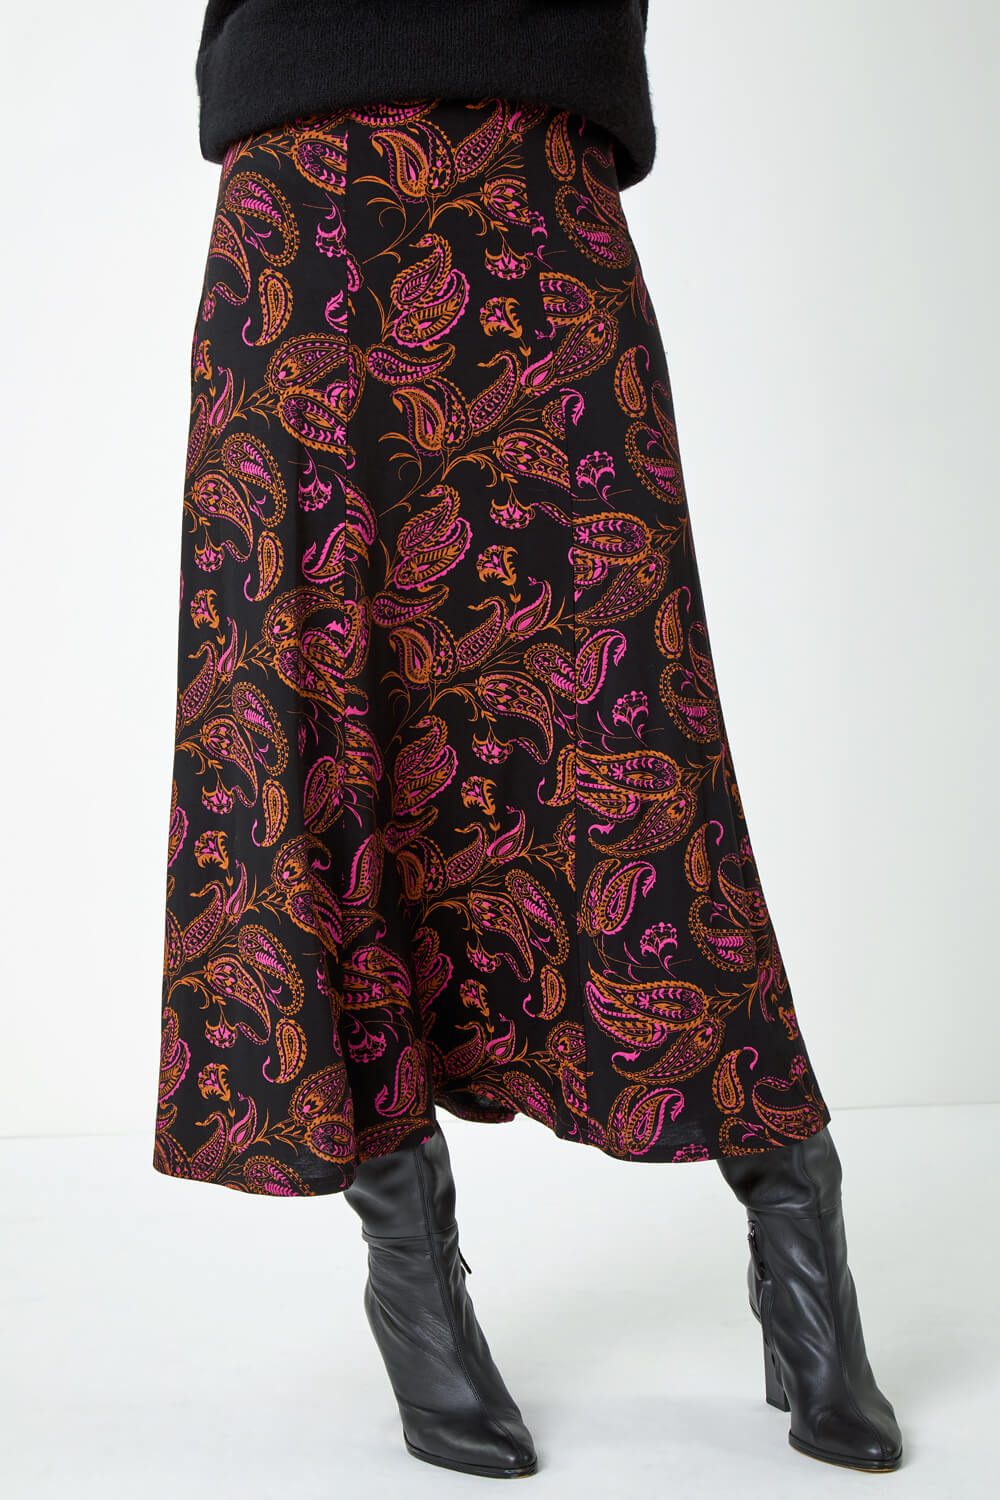 PINK Paisley Print Midi Stretch Skirt, Image 2 of 5